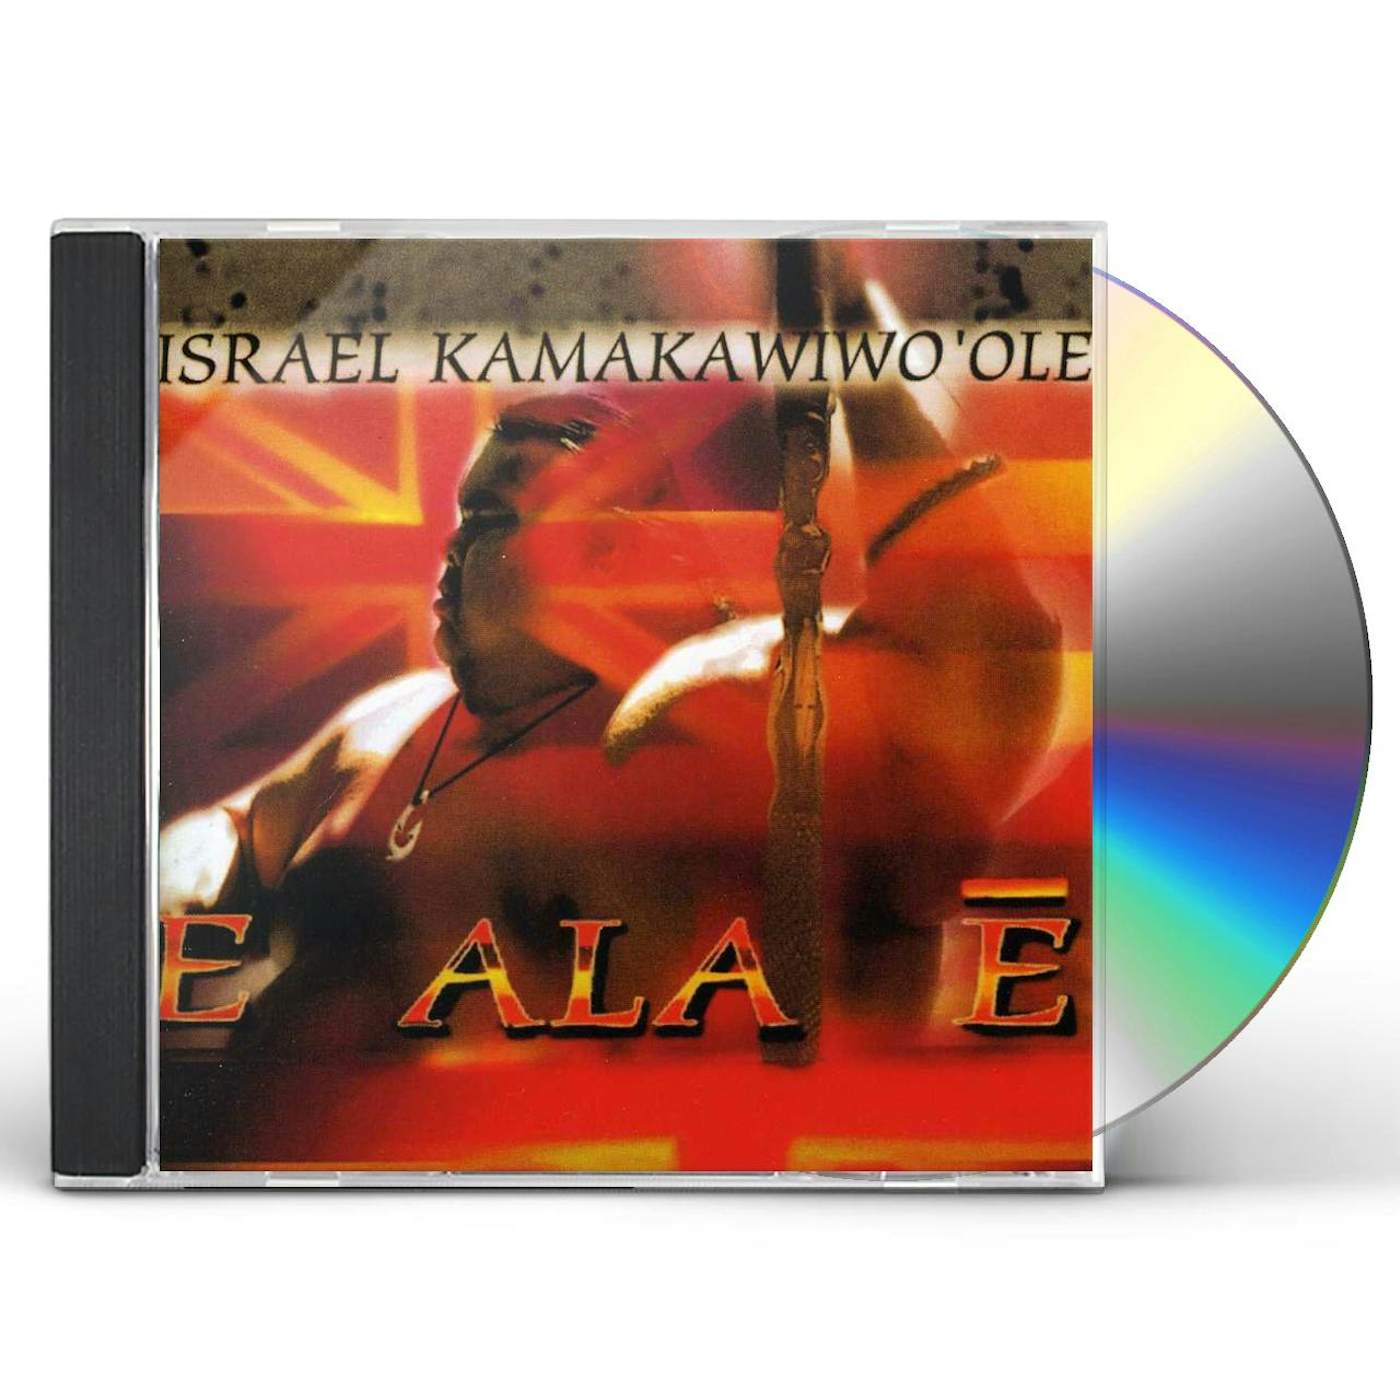 Israel Kamakawiwo'ole E ALA E CD